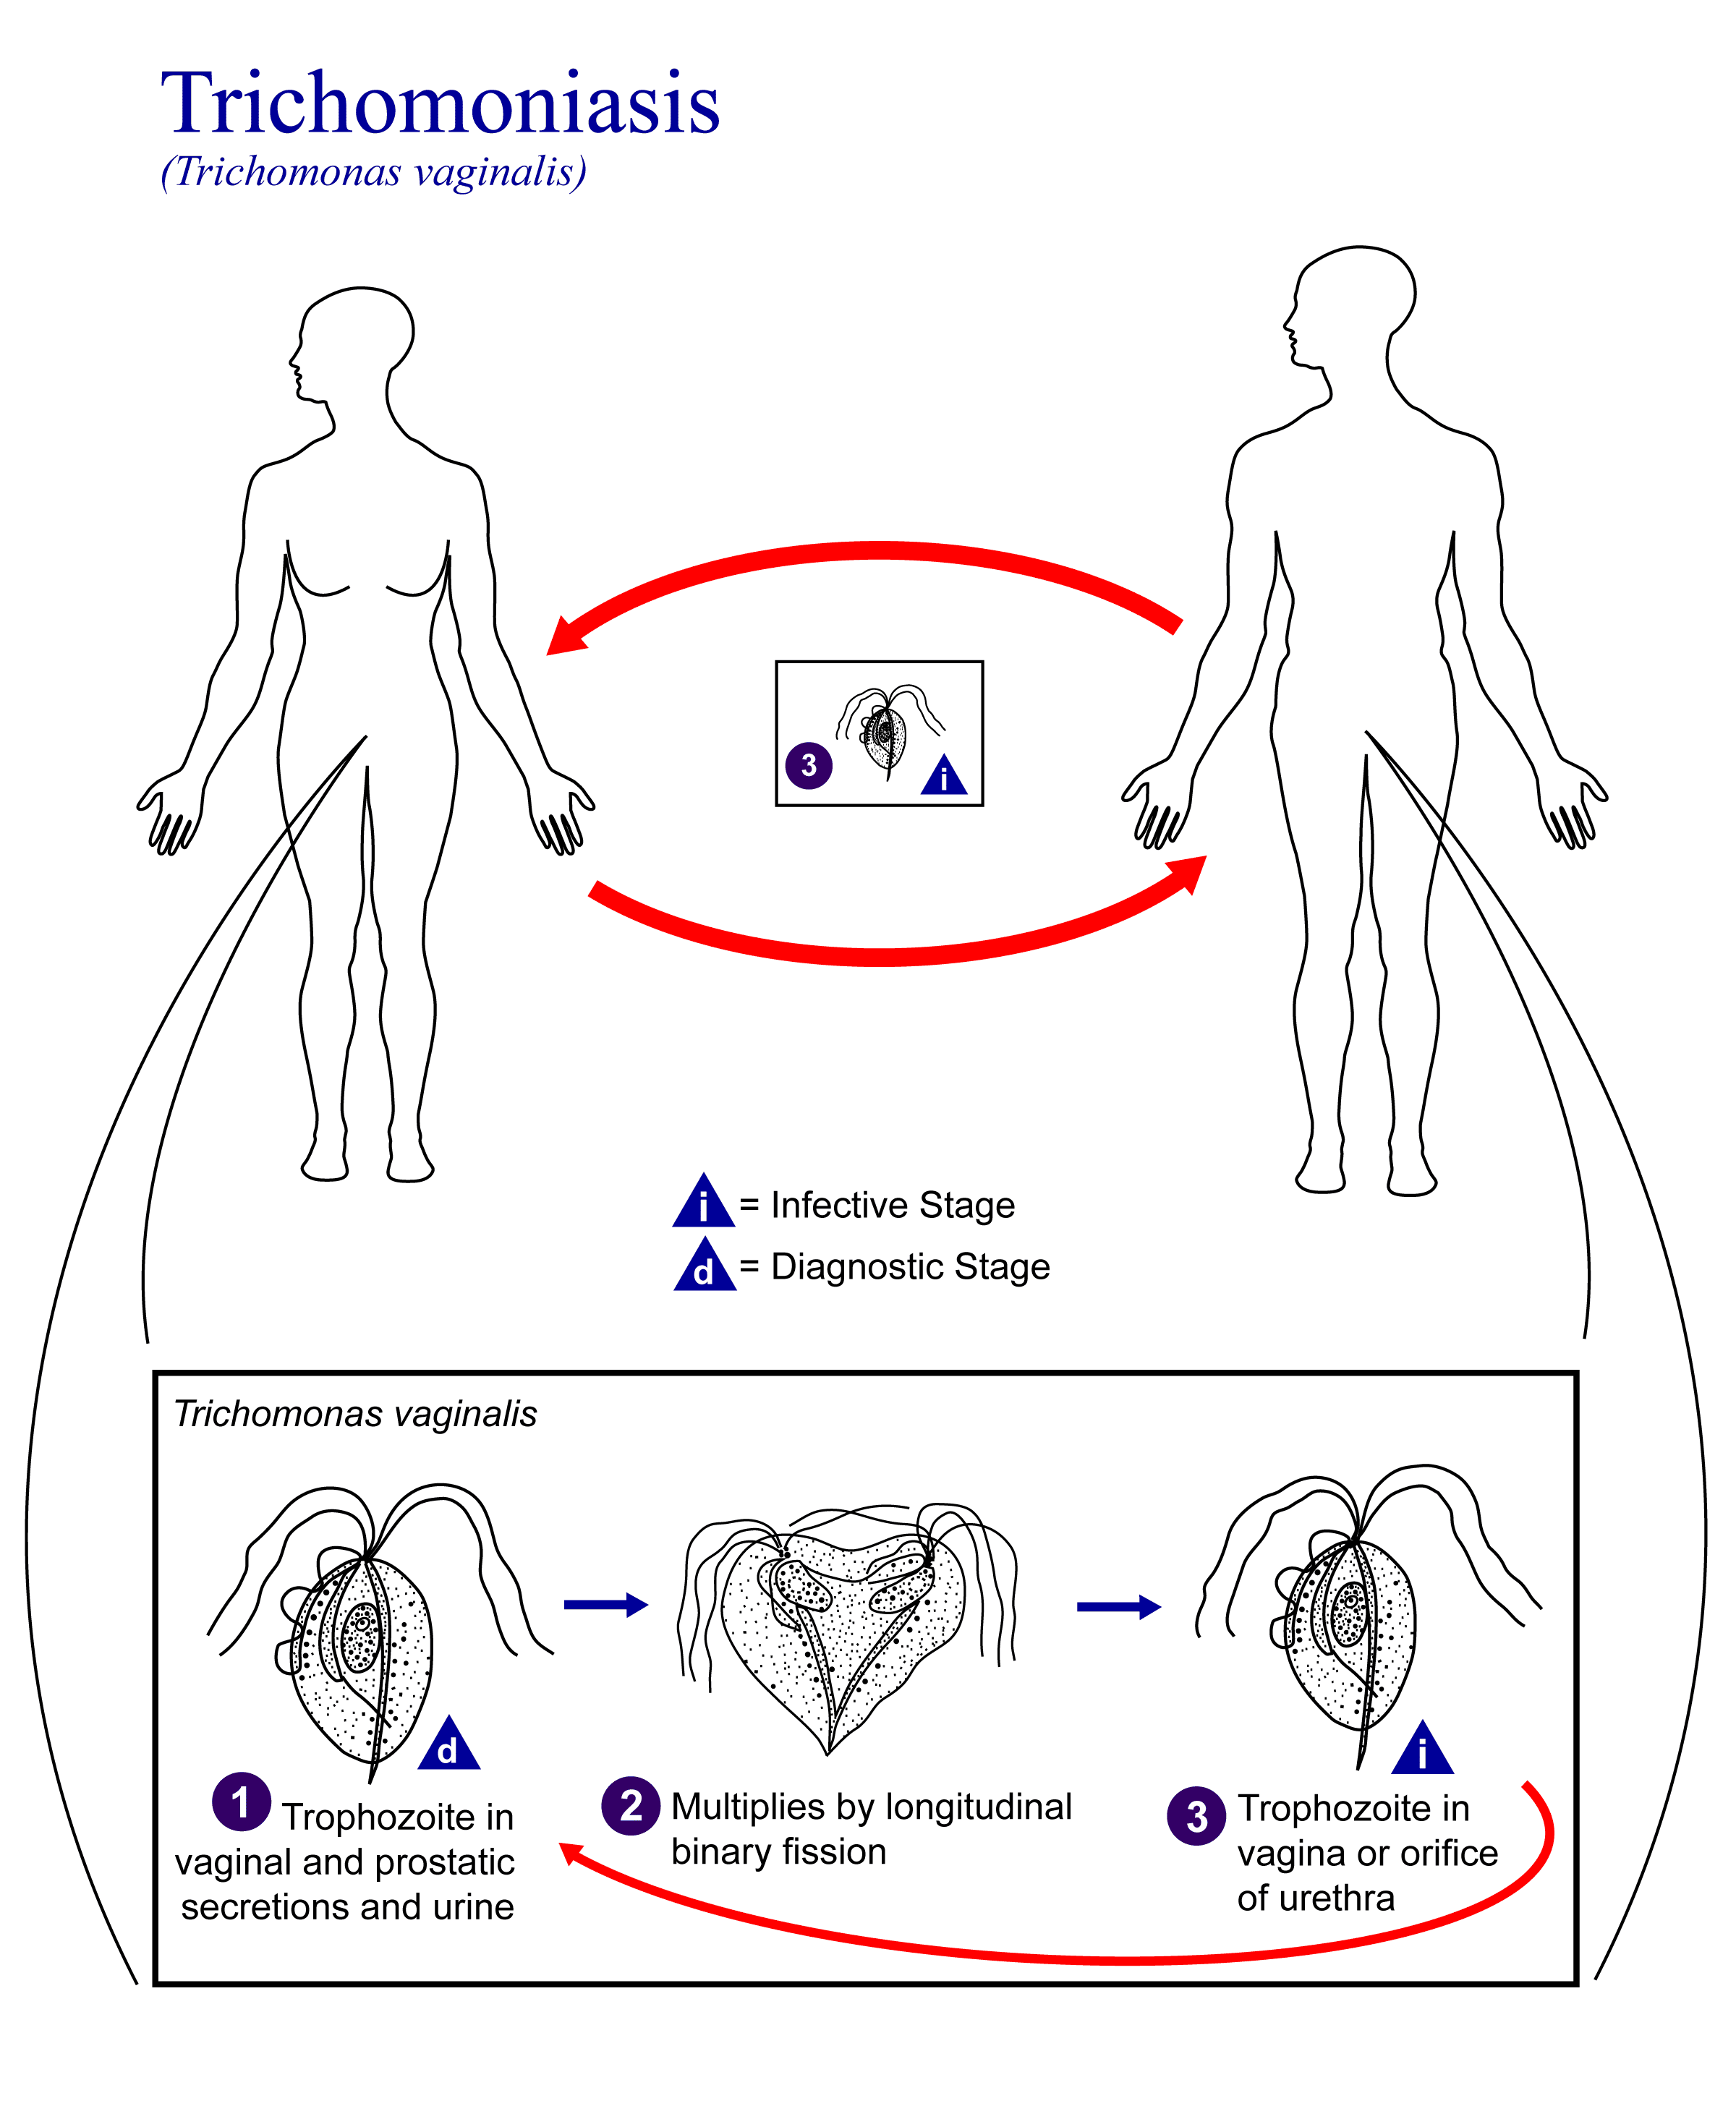 The life cycle of Trichomonas Vaginalis